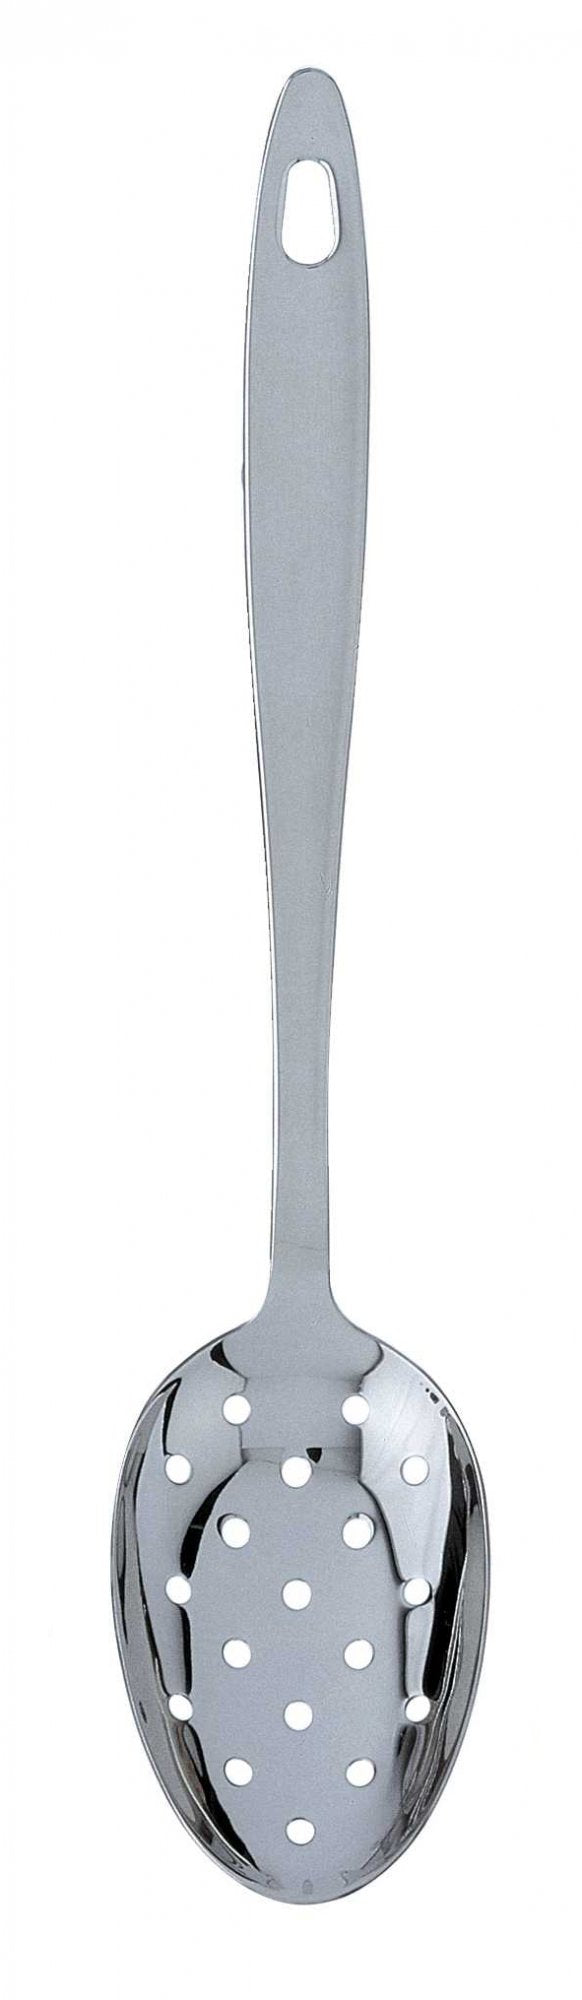 Grunwerg Perforated Straining Spoon